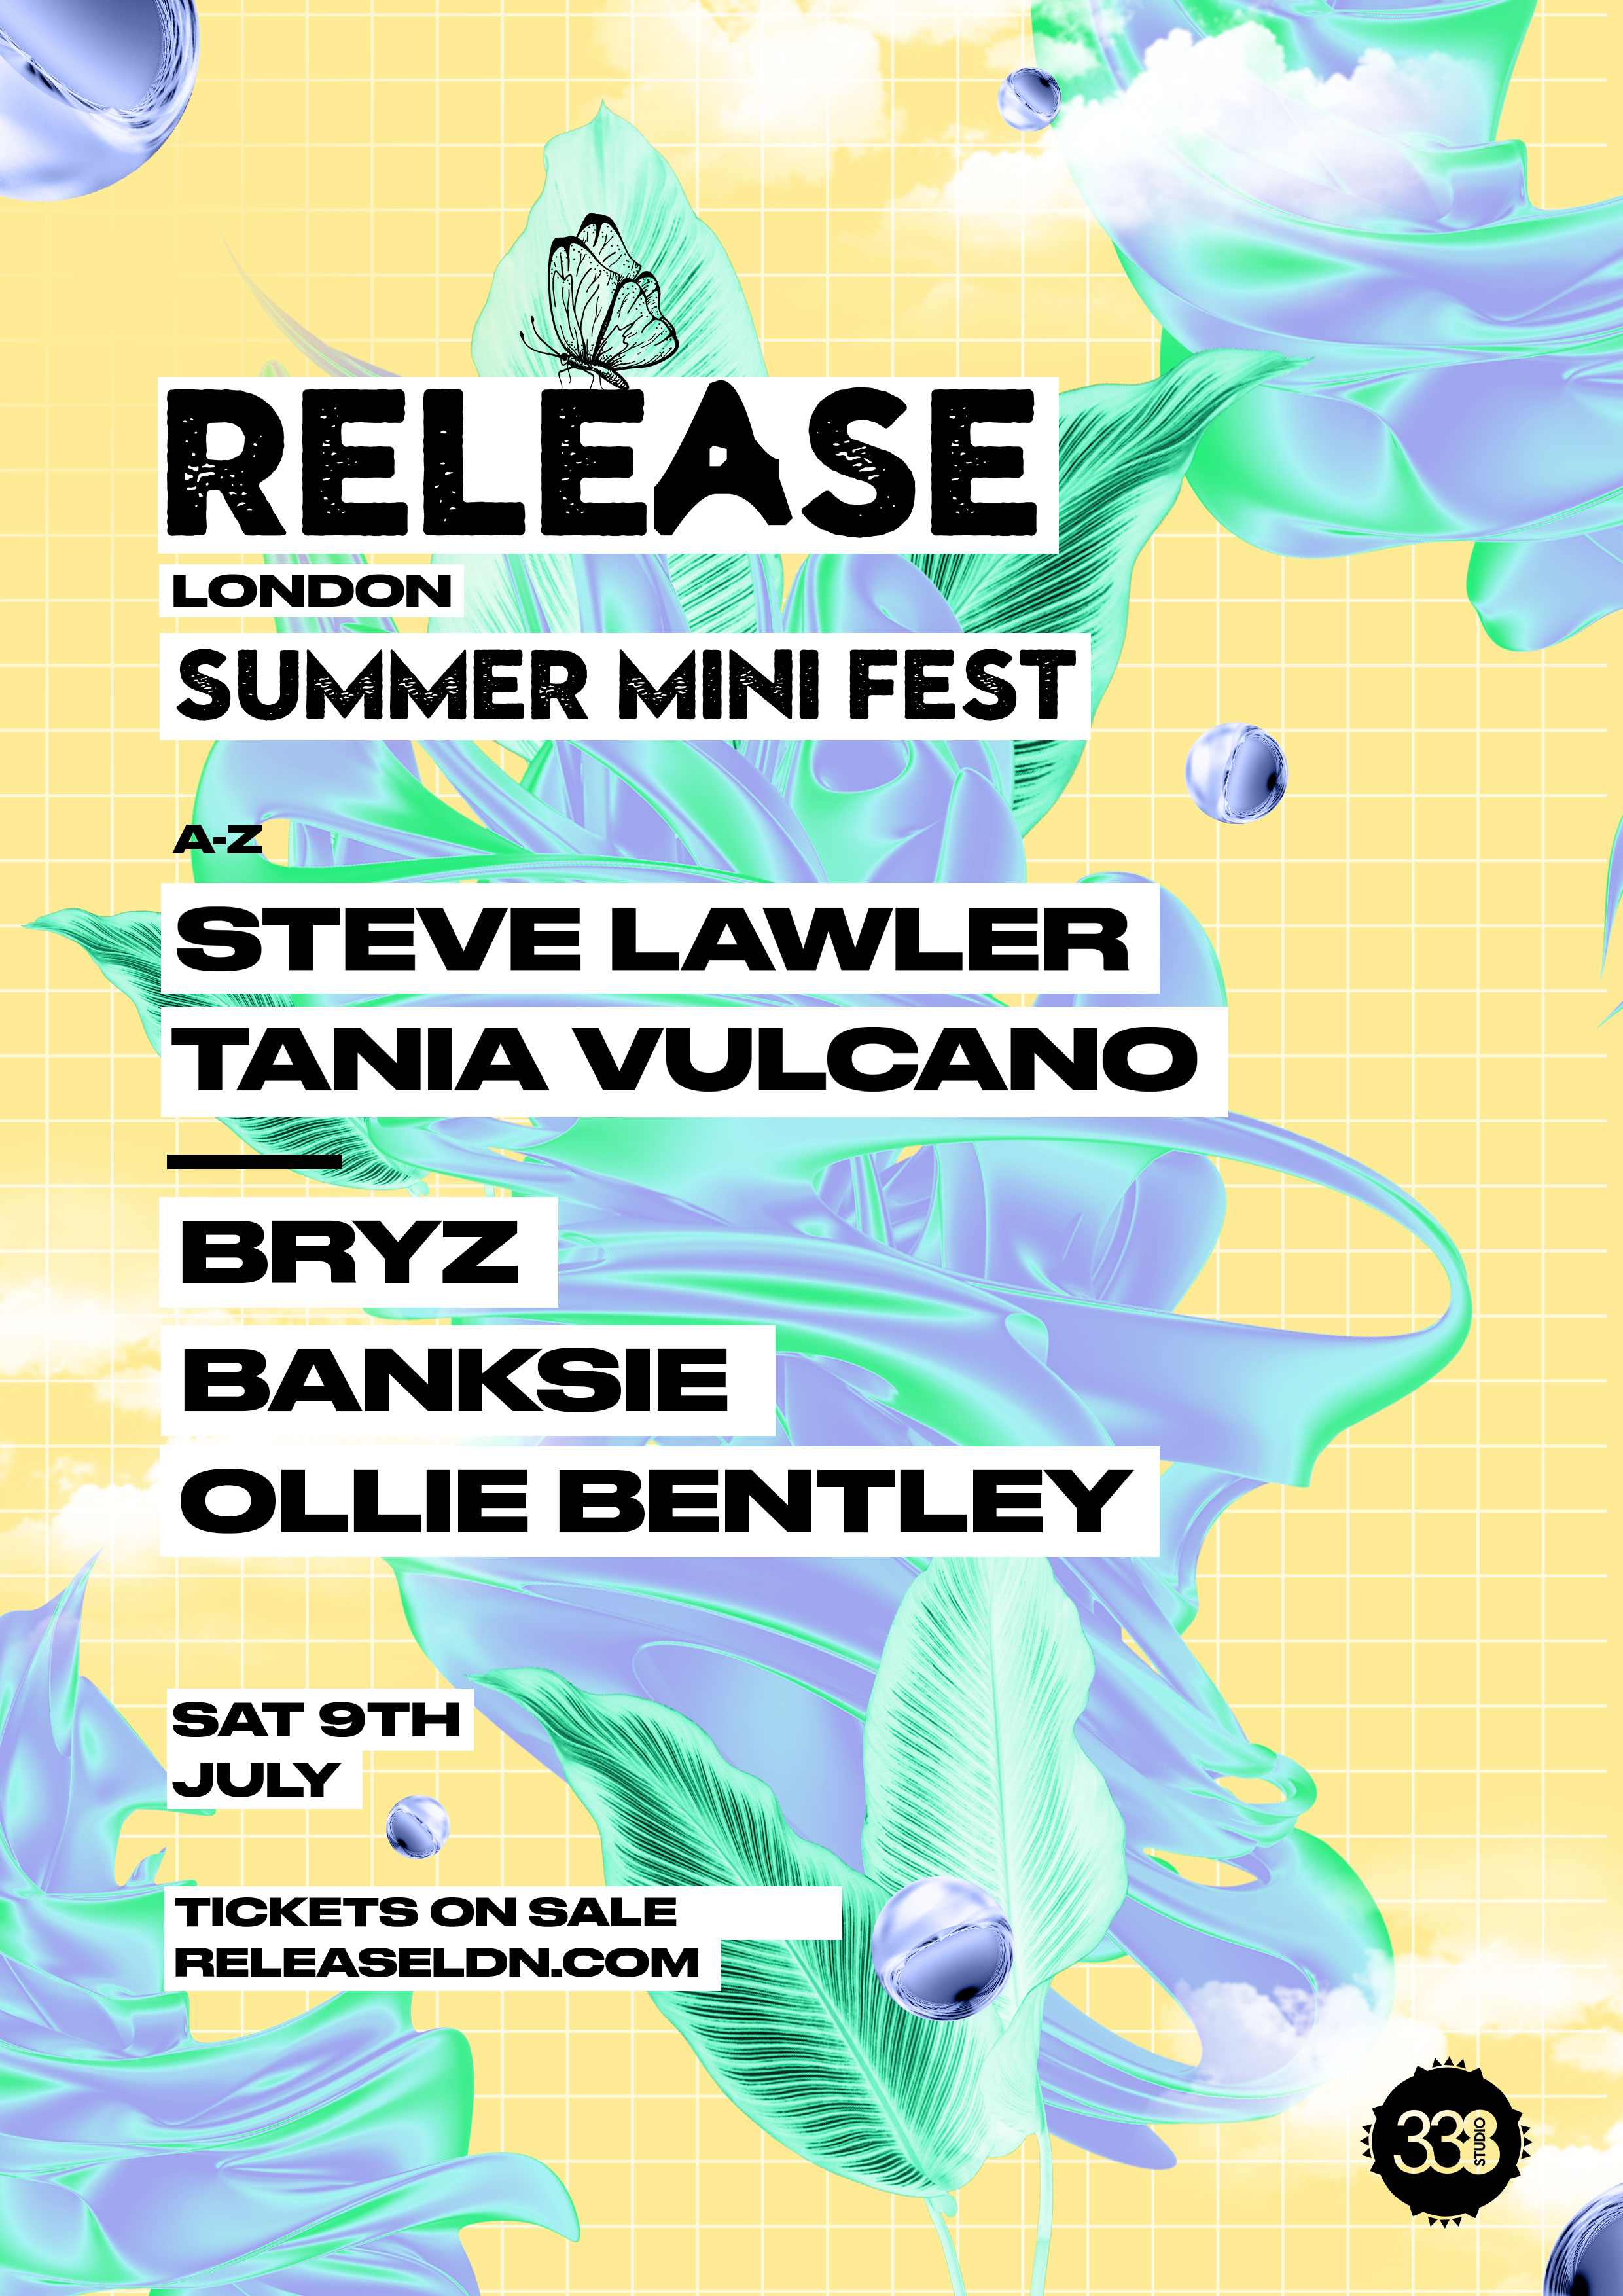 Release Summer Mini Fest with Steve Lawler + Tania Vulcano, Bryz & Banksie - Flyer front